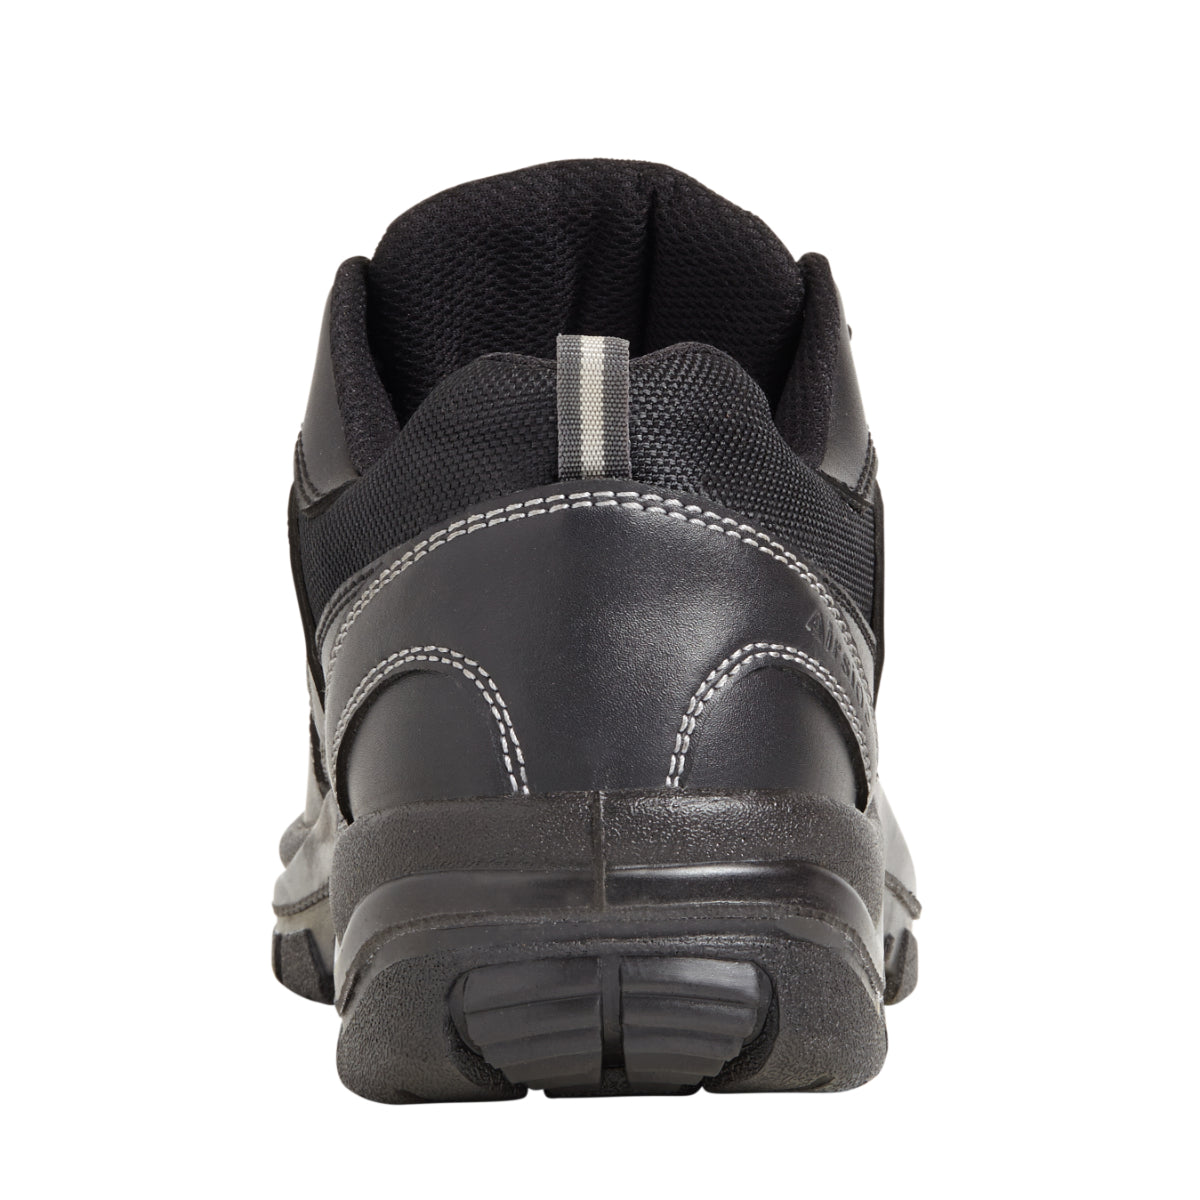 Airside Black Non-Metallic Safety Shoe